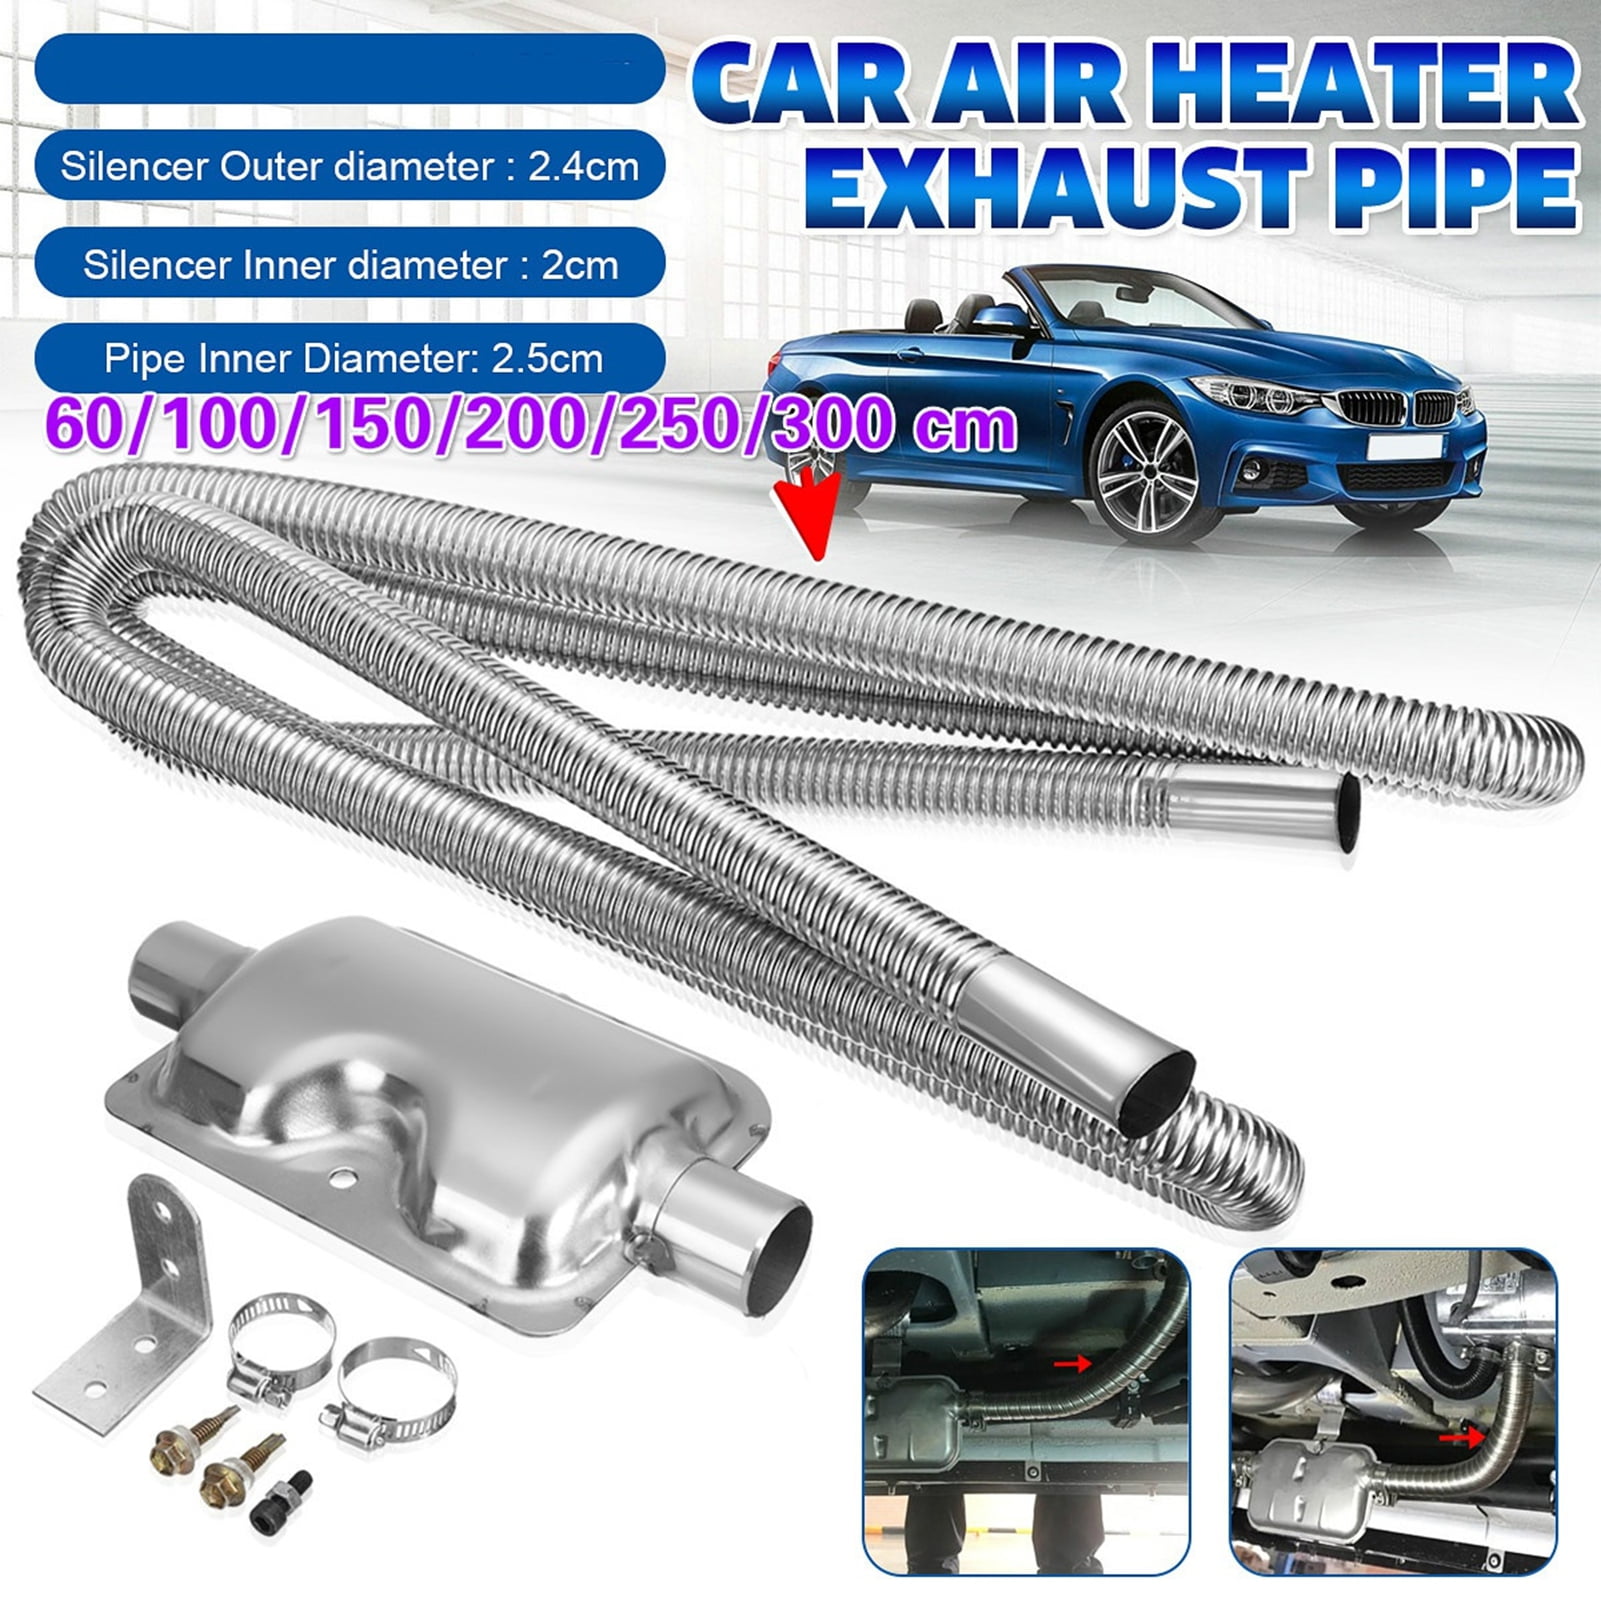 CABERRE 250cm Car Parking Diesel Heater Stainless Steel Exhaust